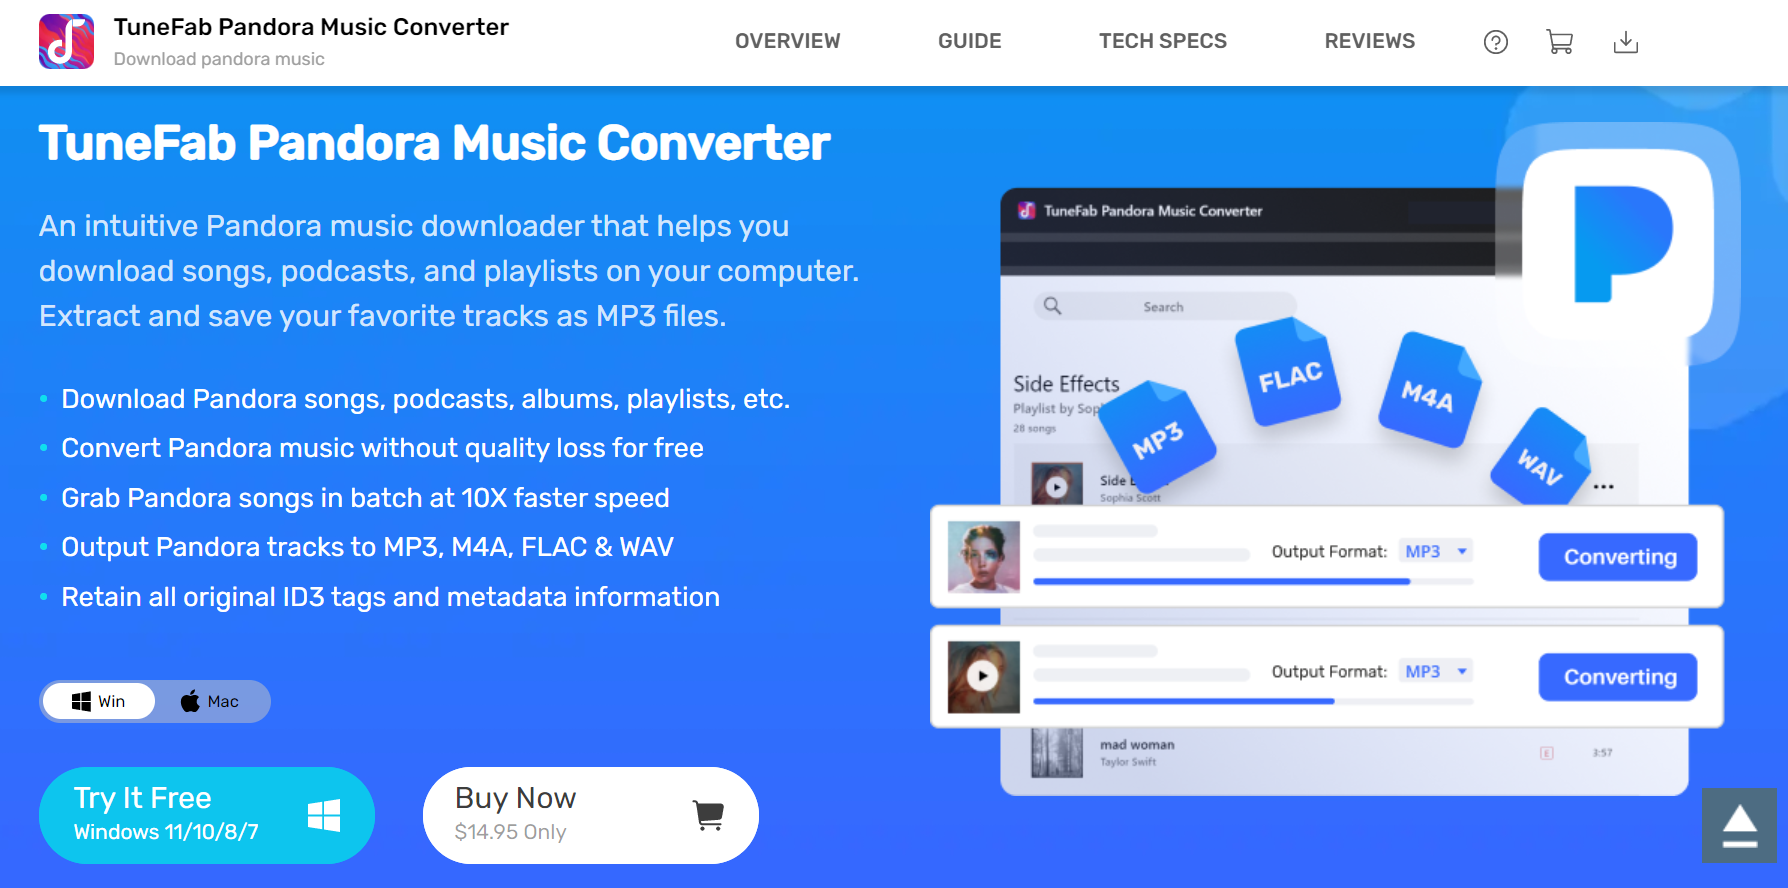 TuneFab Pandora Music Converter Review